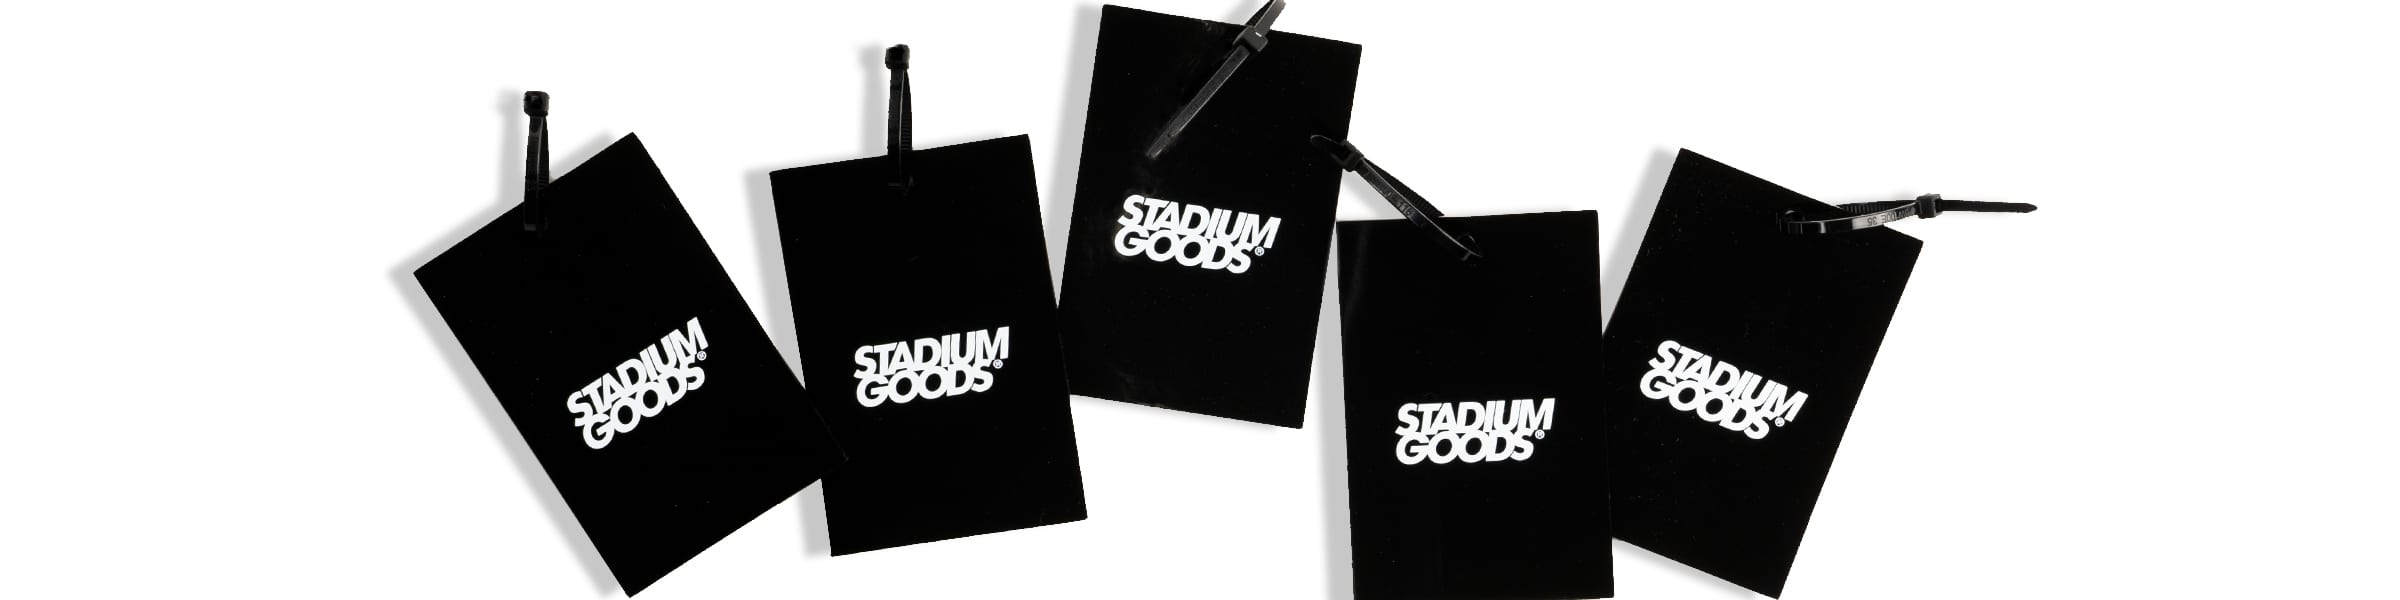 Stadium Goods case study - product tags